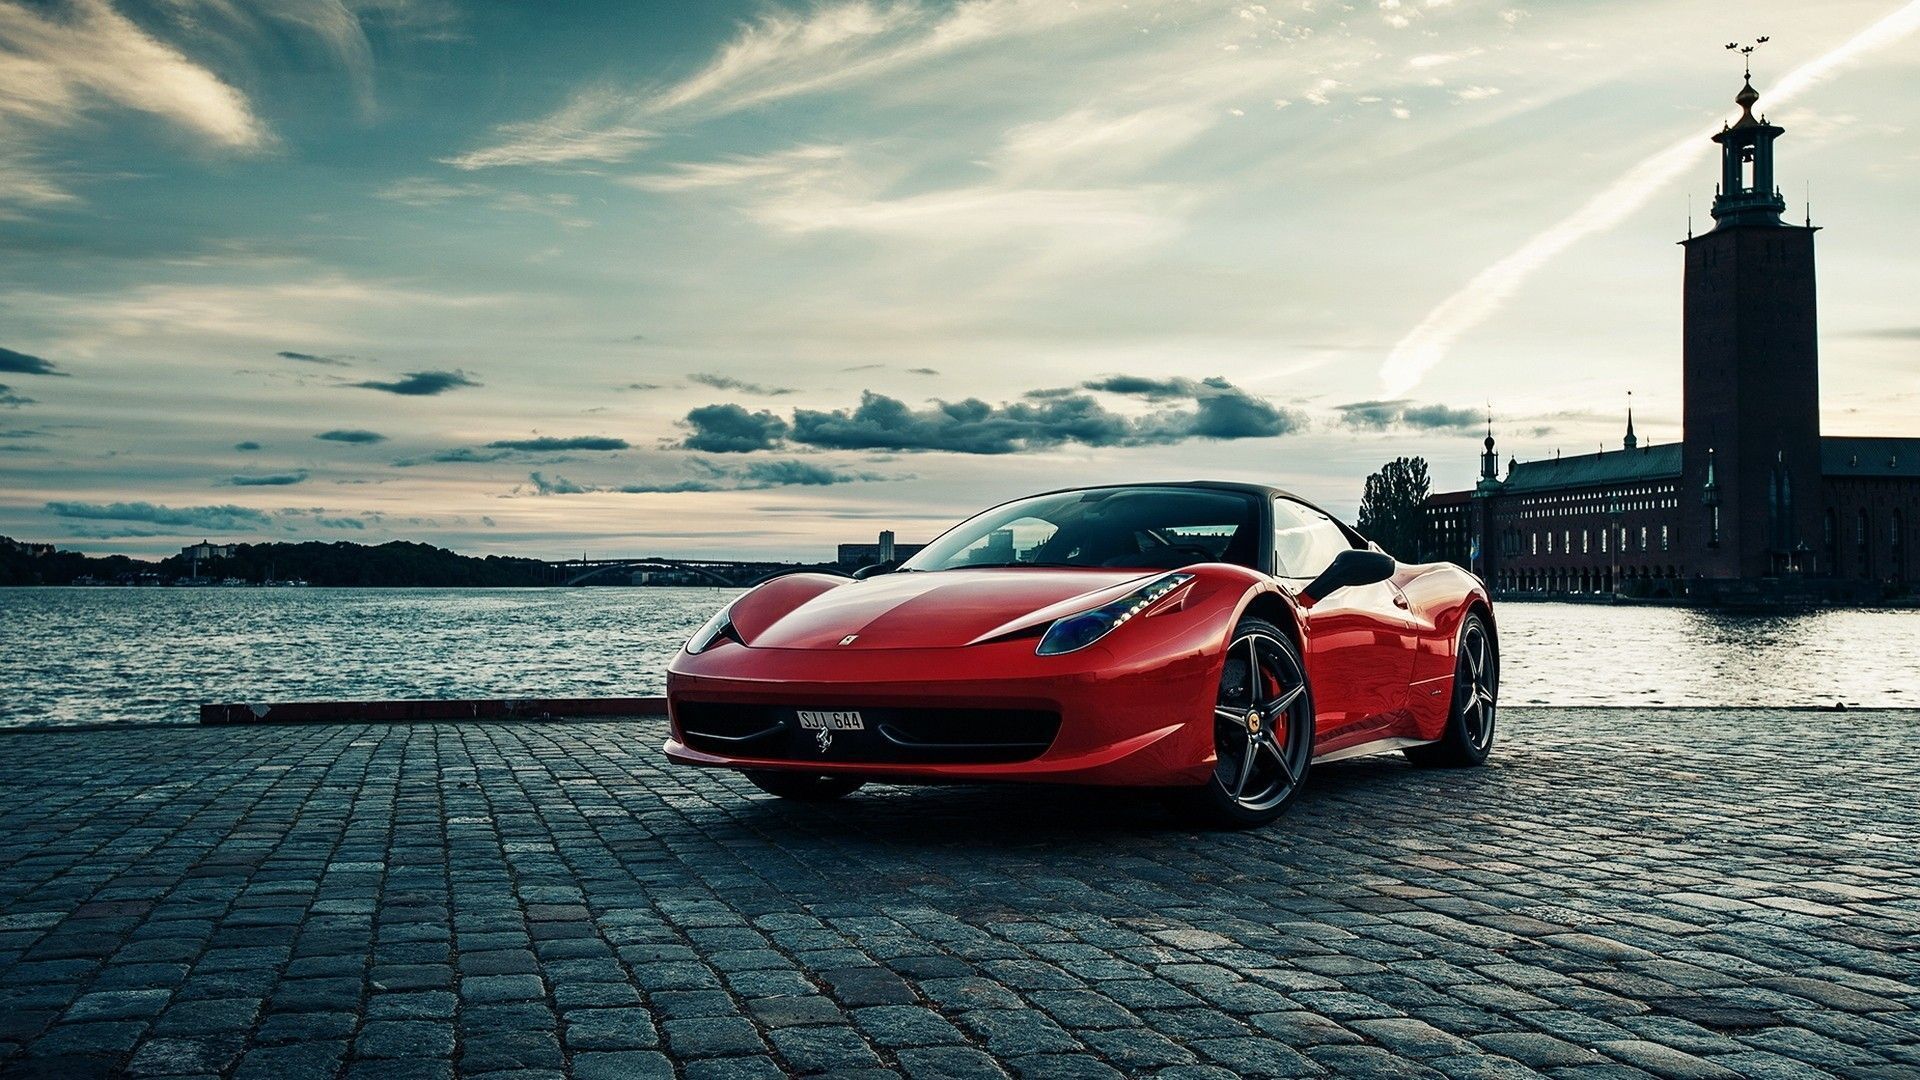 30+] Ferrari Wallpaper HD Widescreen - WallpaperSafari